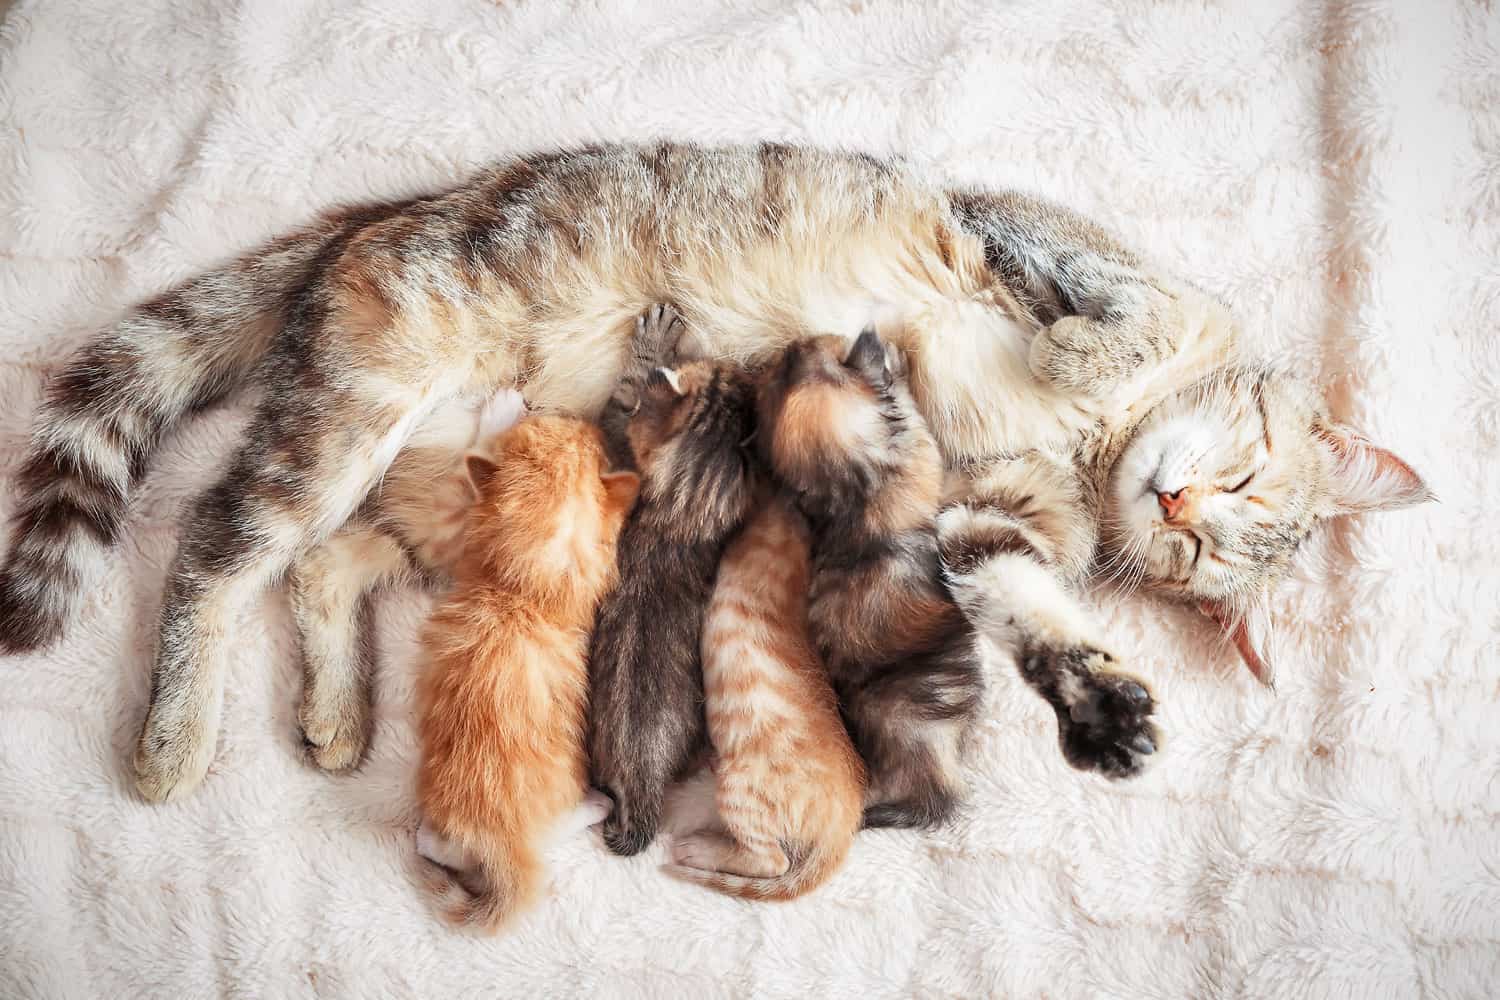 Grey mother cat nursing her babies kittens, close up
